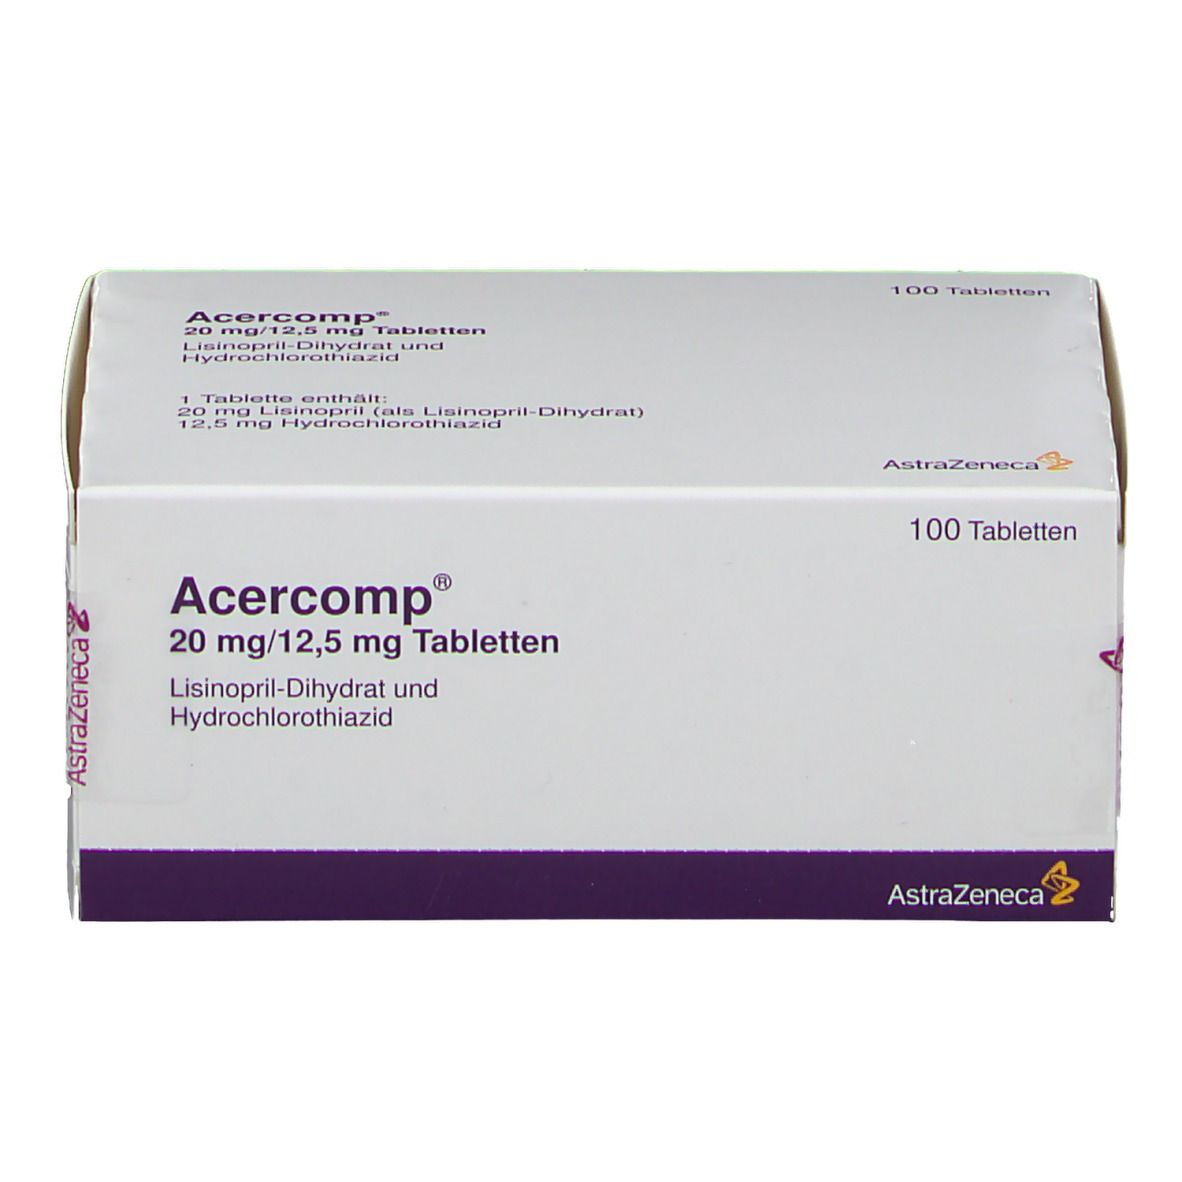 Acercomp® 20 mg/12,5 mg